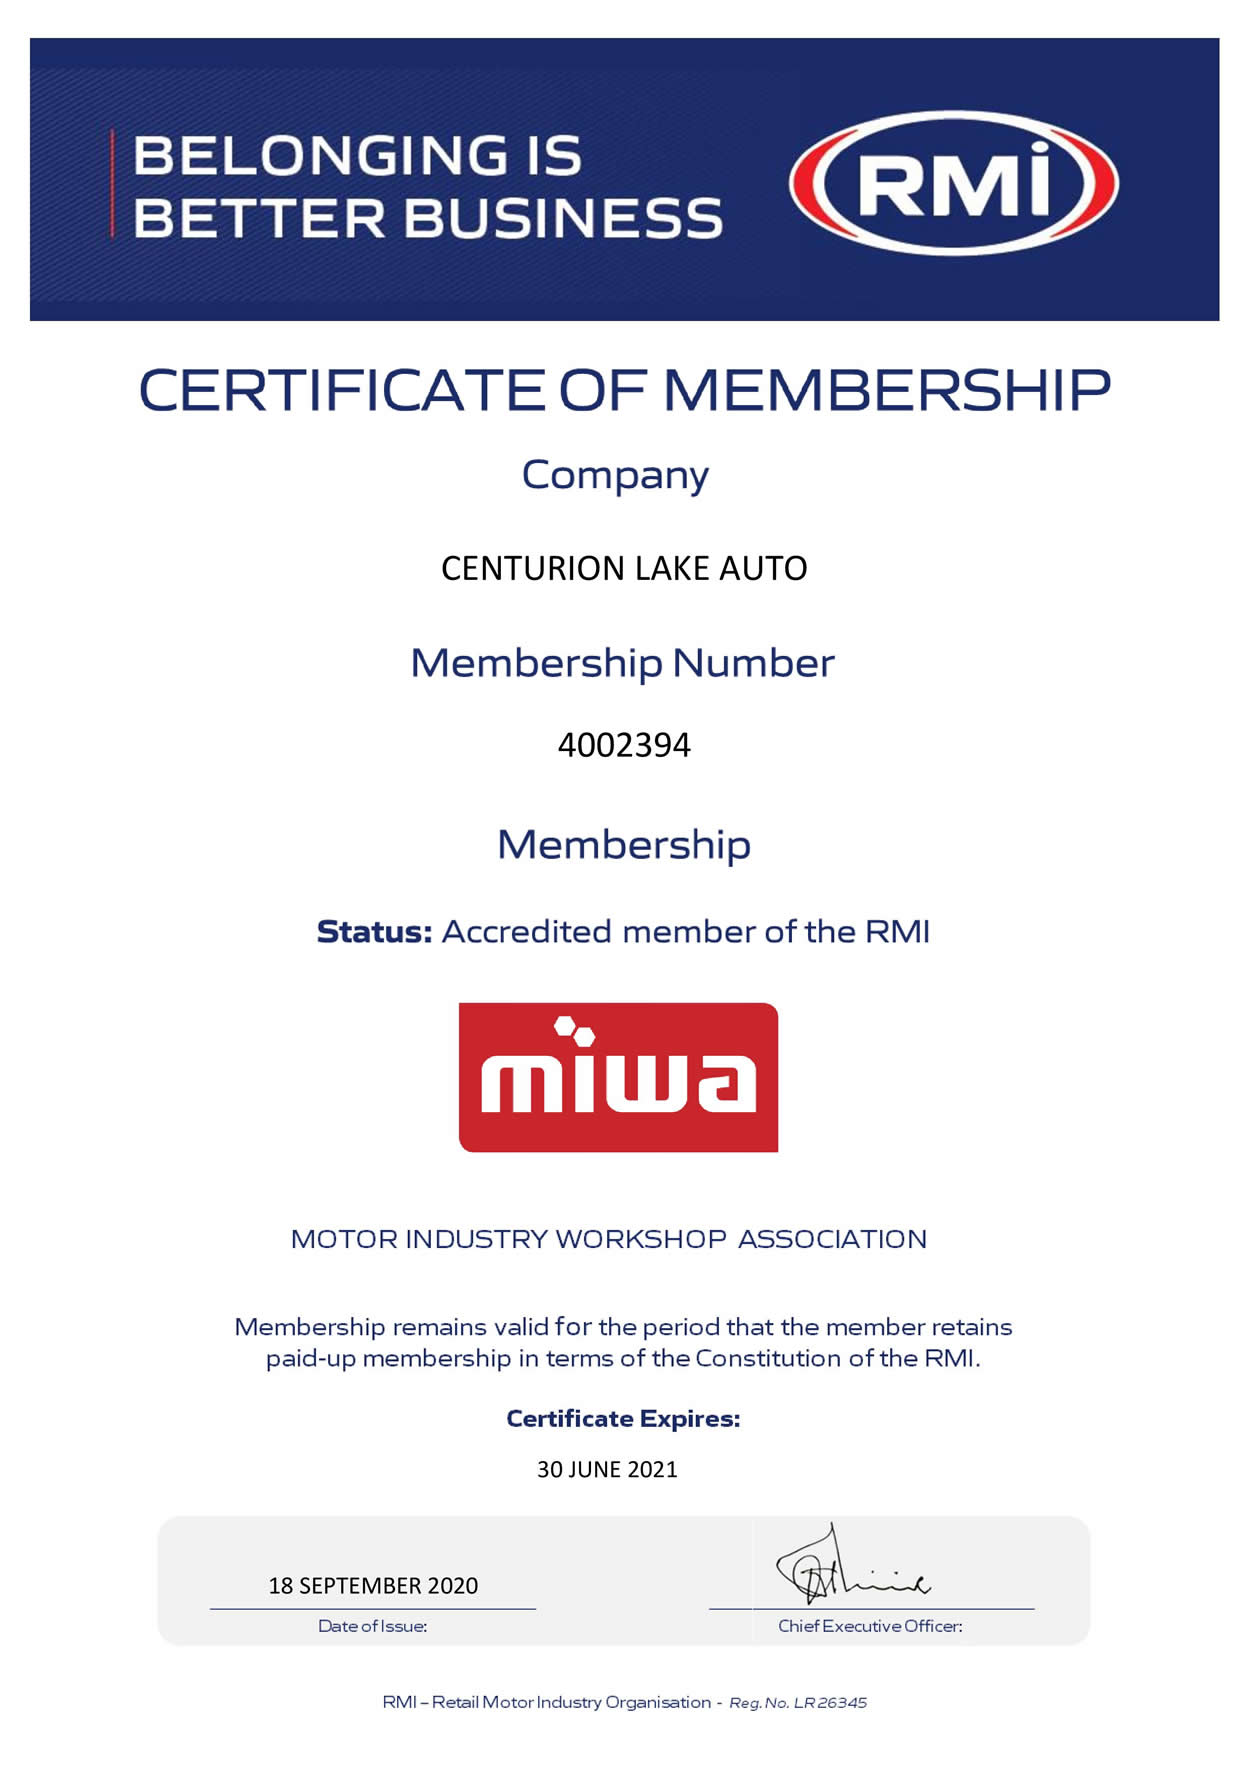 centurion lake auto repairs and service miwa certificate 2021